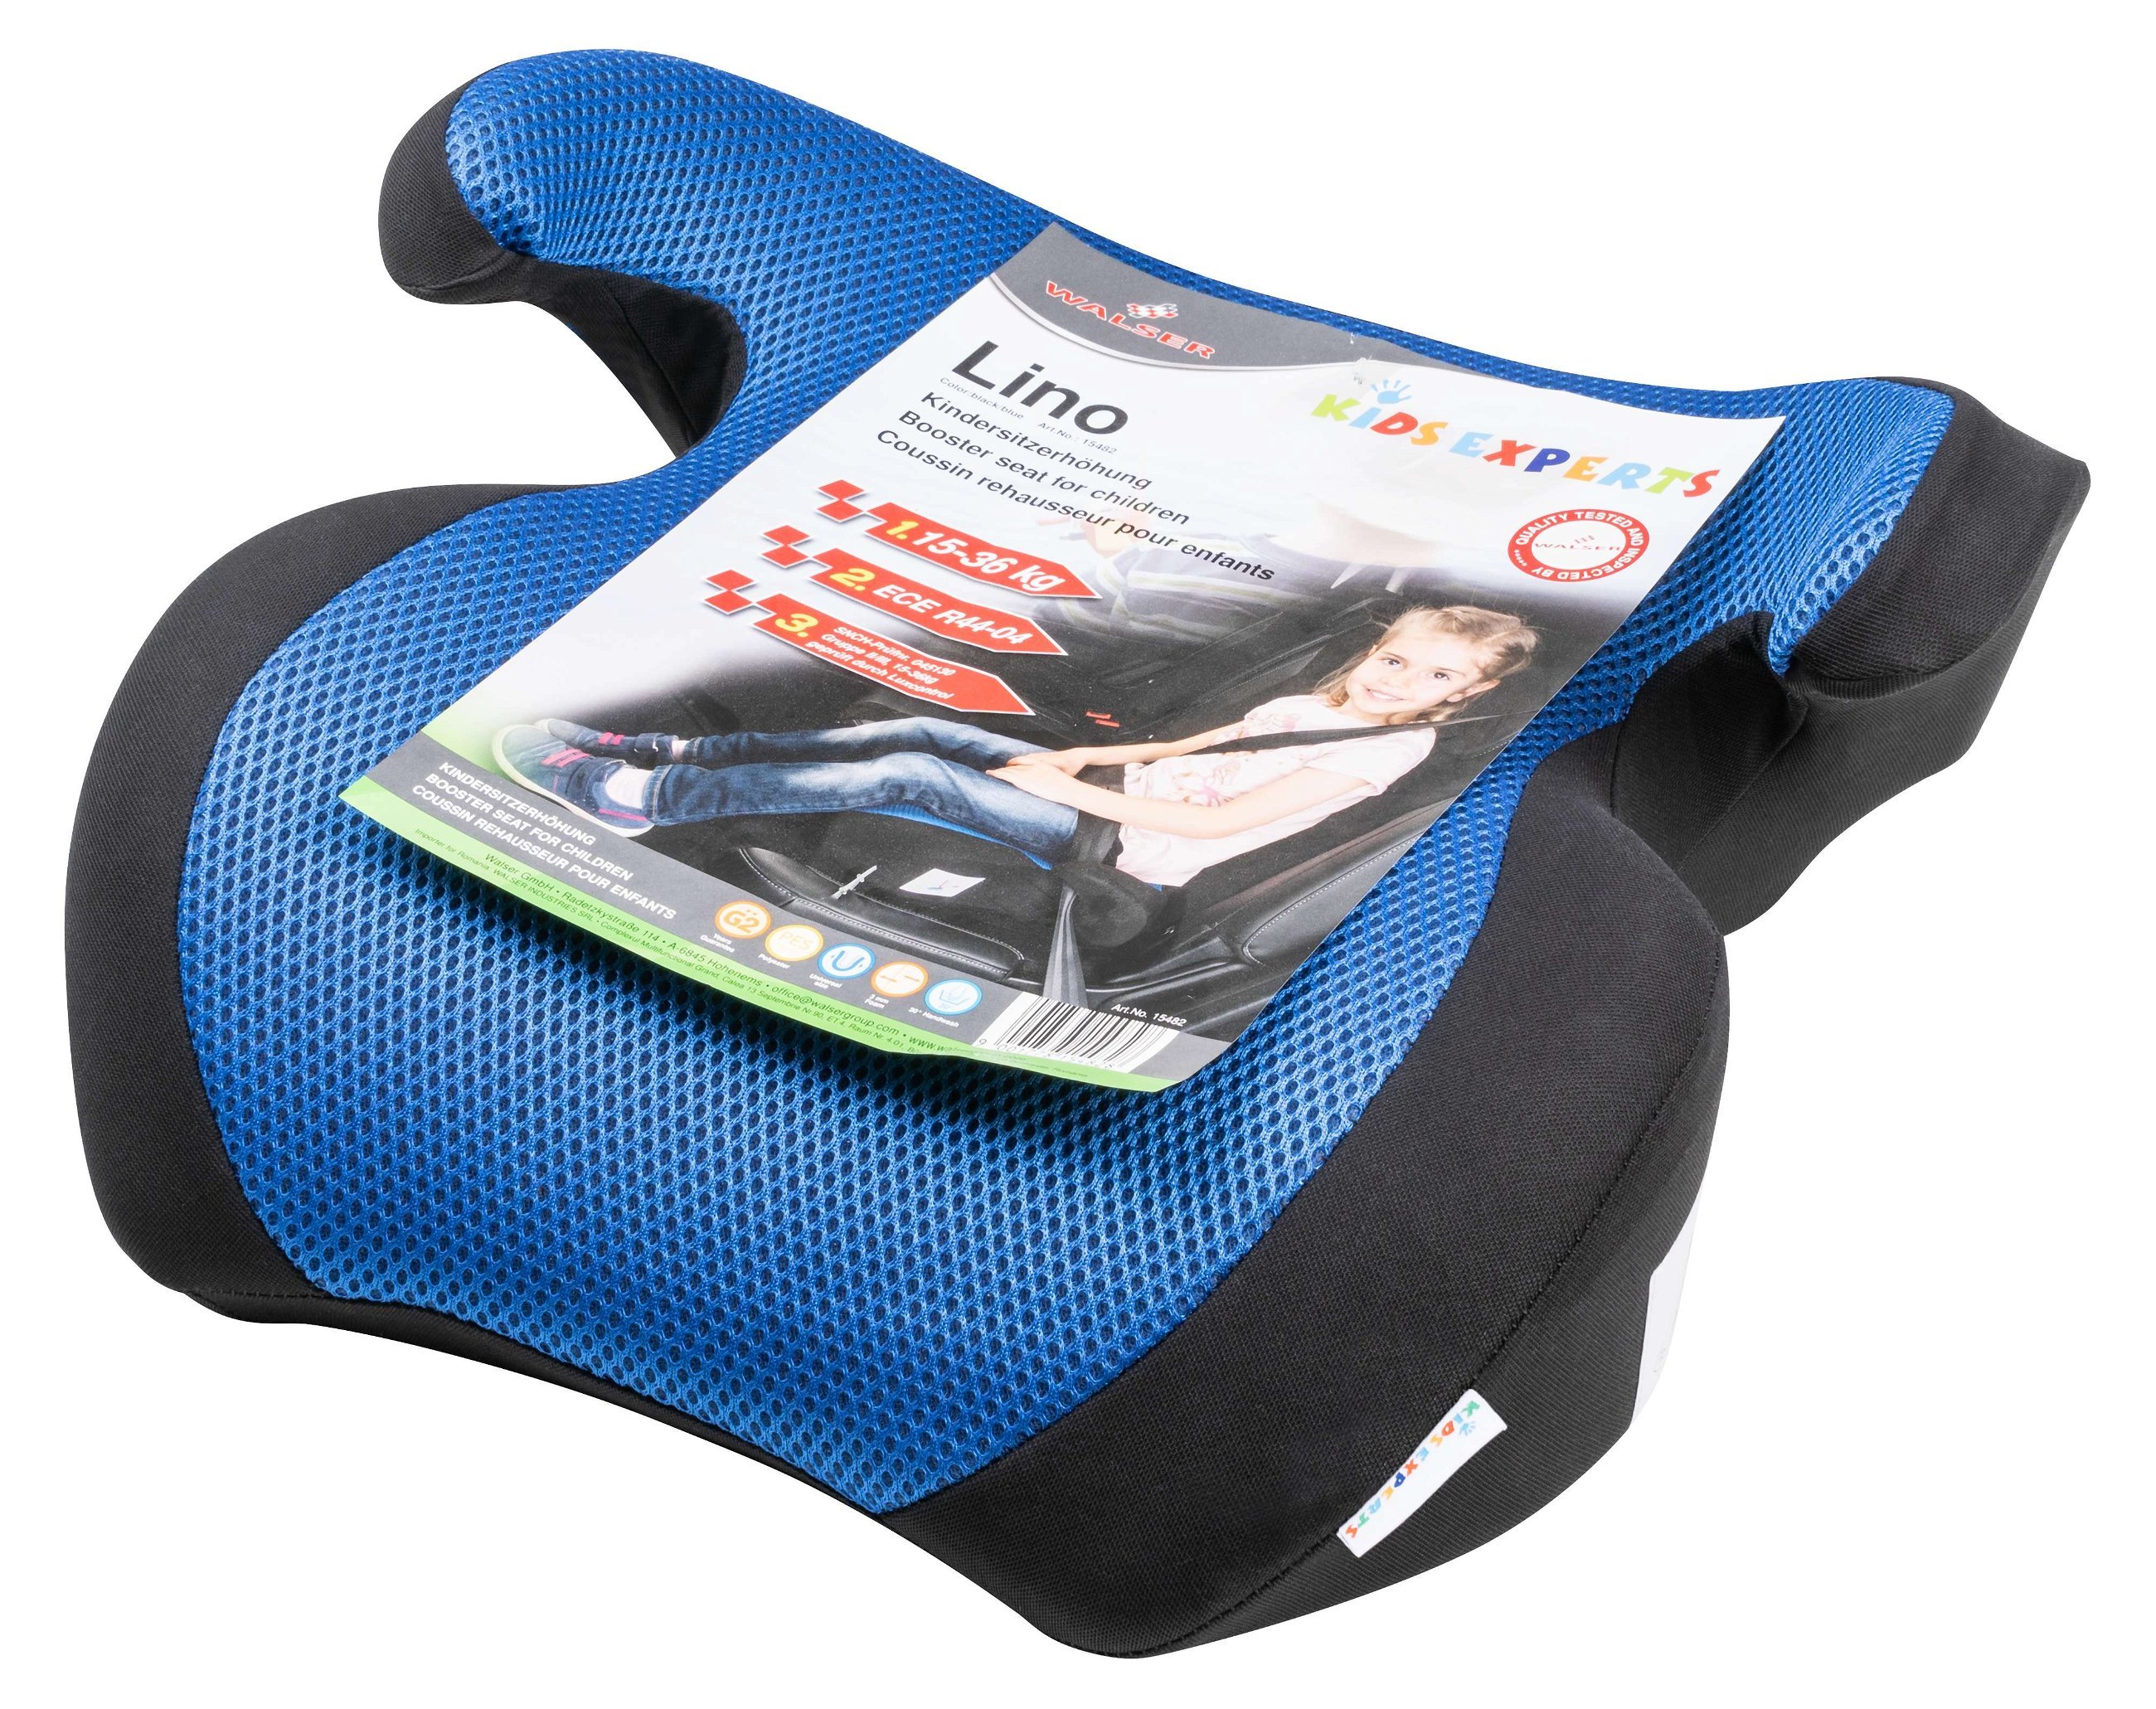 Kindersitzerhöhung Lino, Auto-Kindersitz ECE 44/04 geprüft schwarz/blau